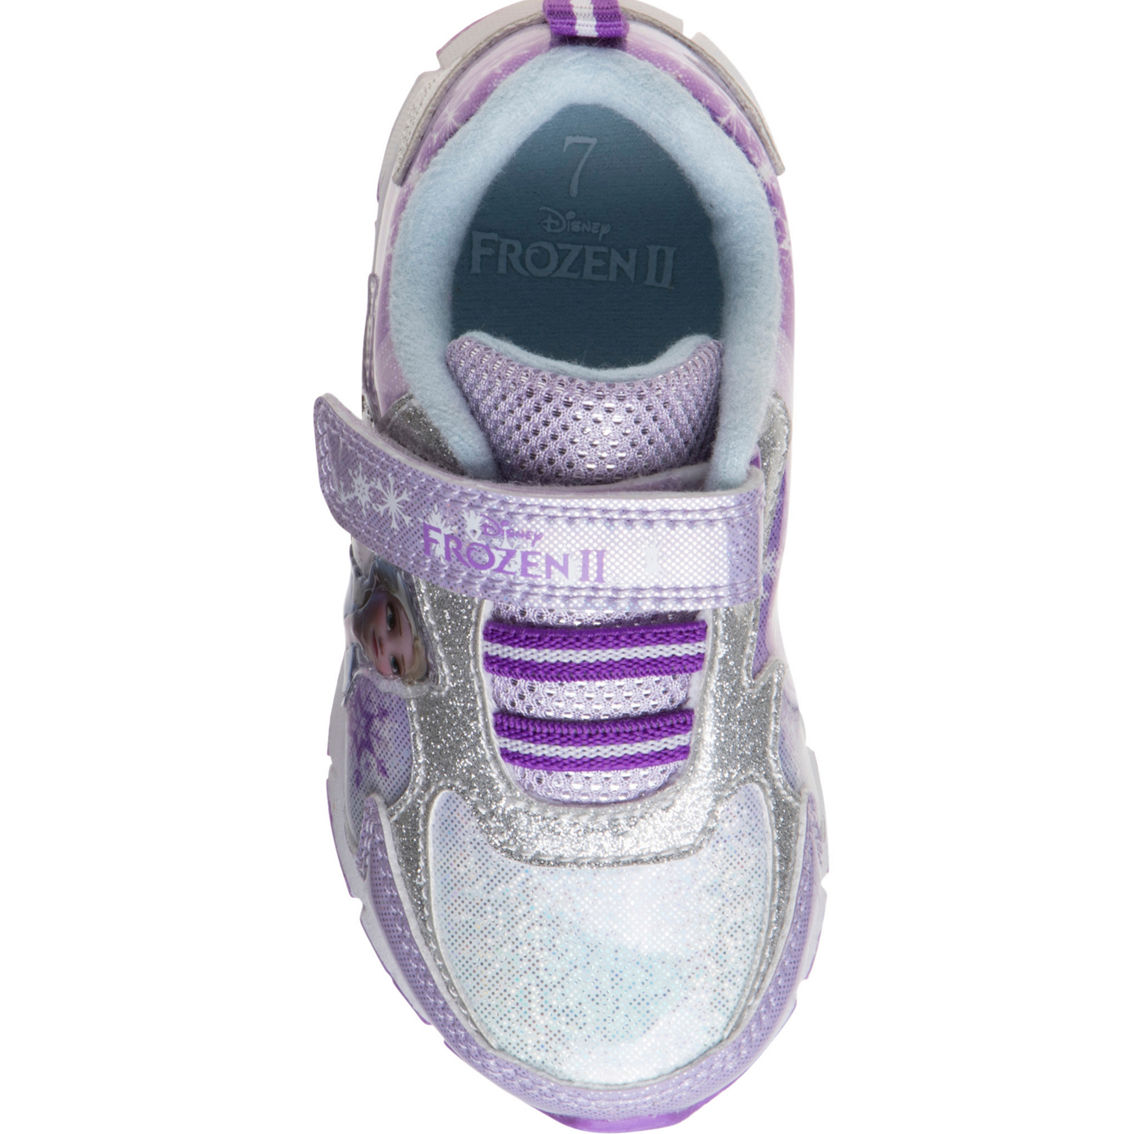 Disney Frozen Toddler Girls Sneakers - Image 4 of 5